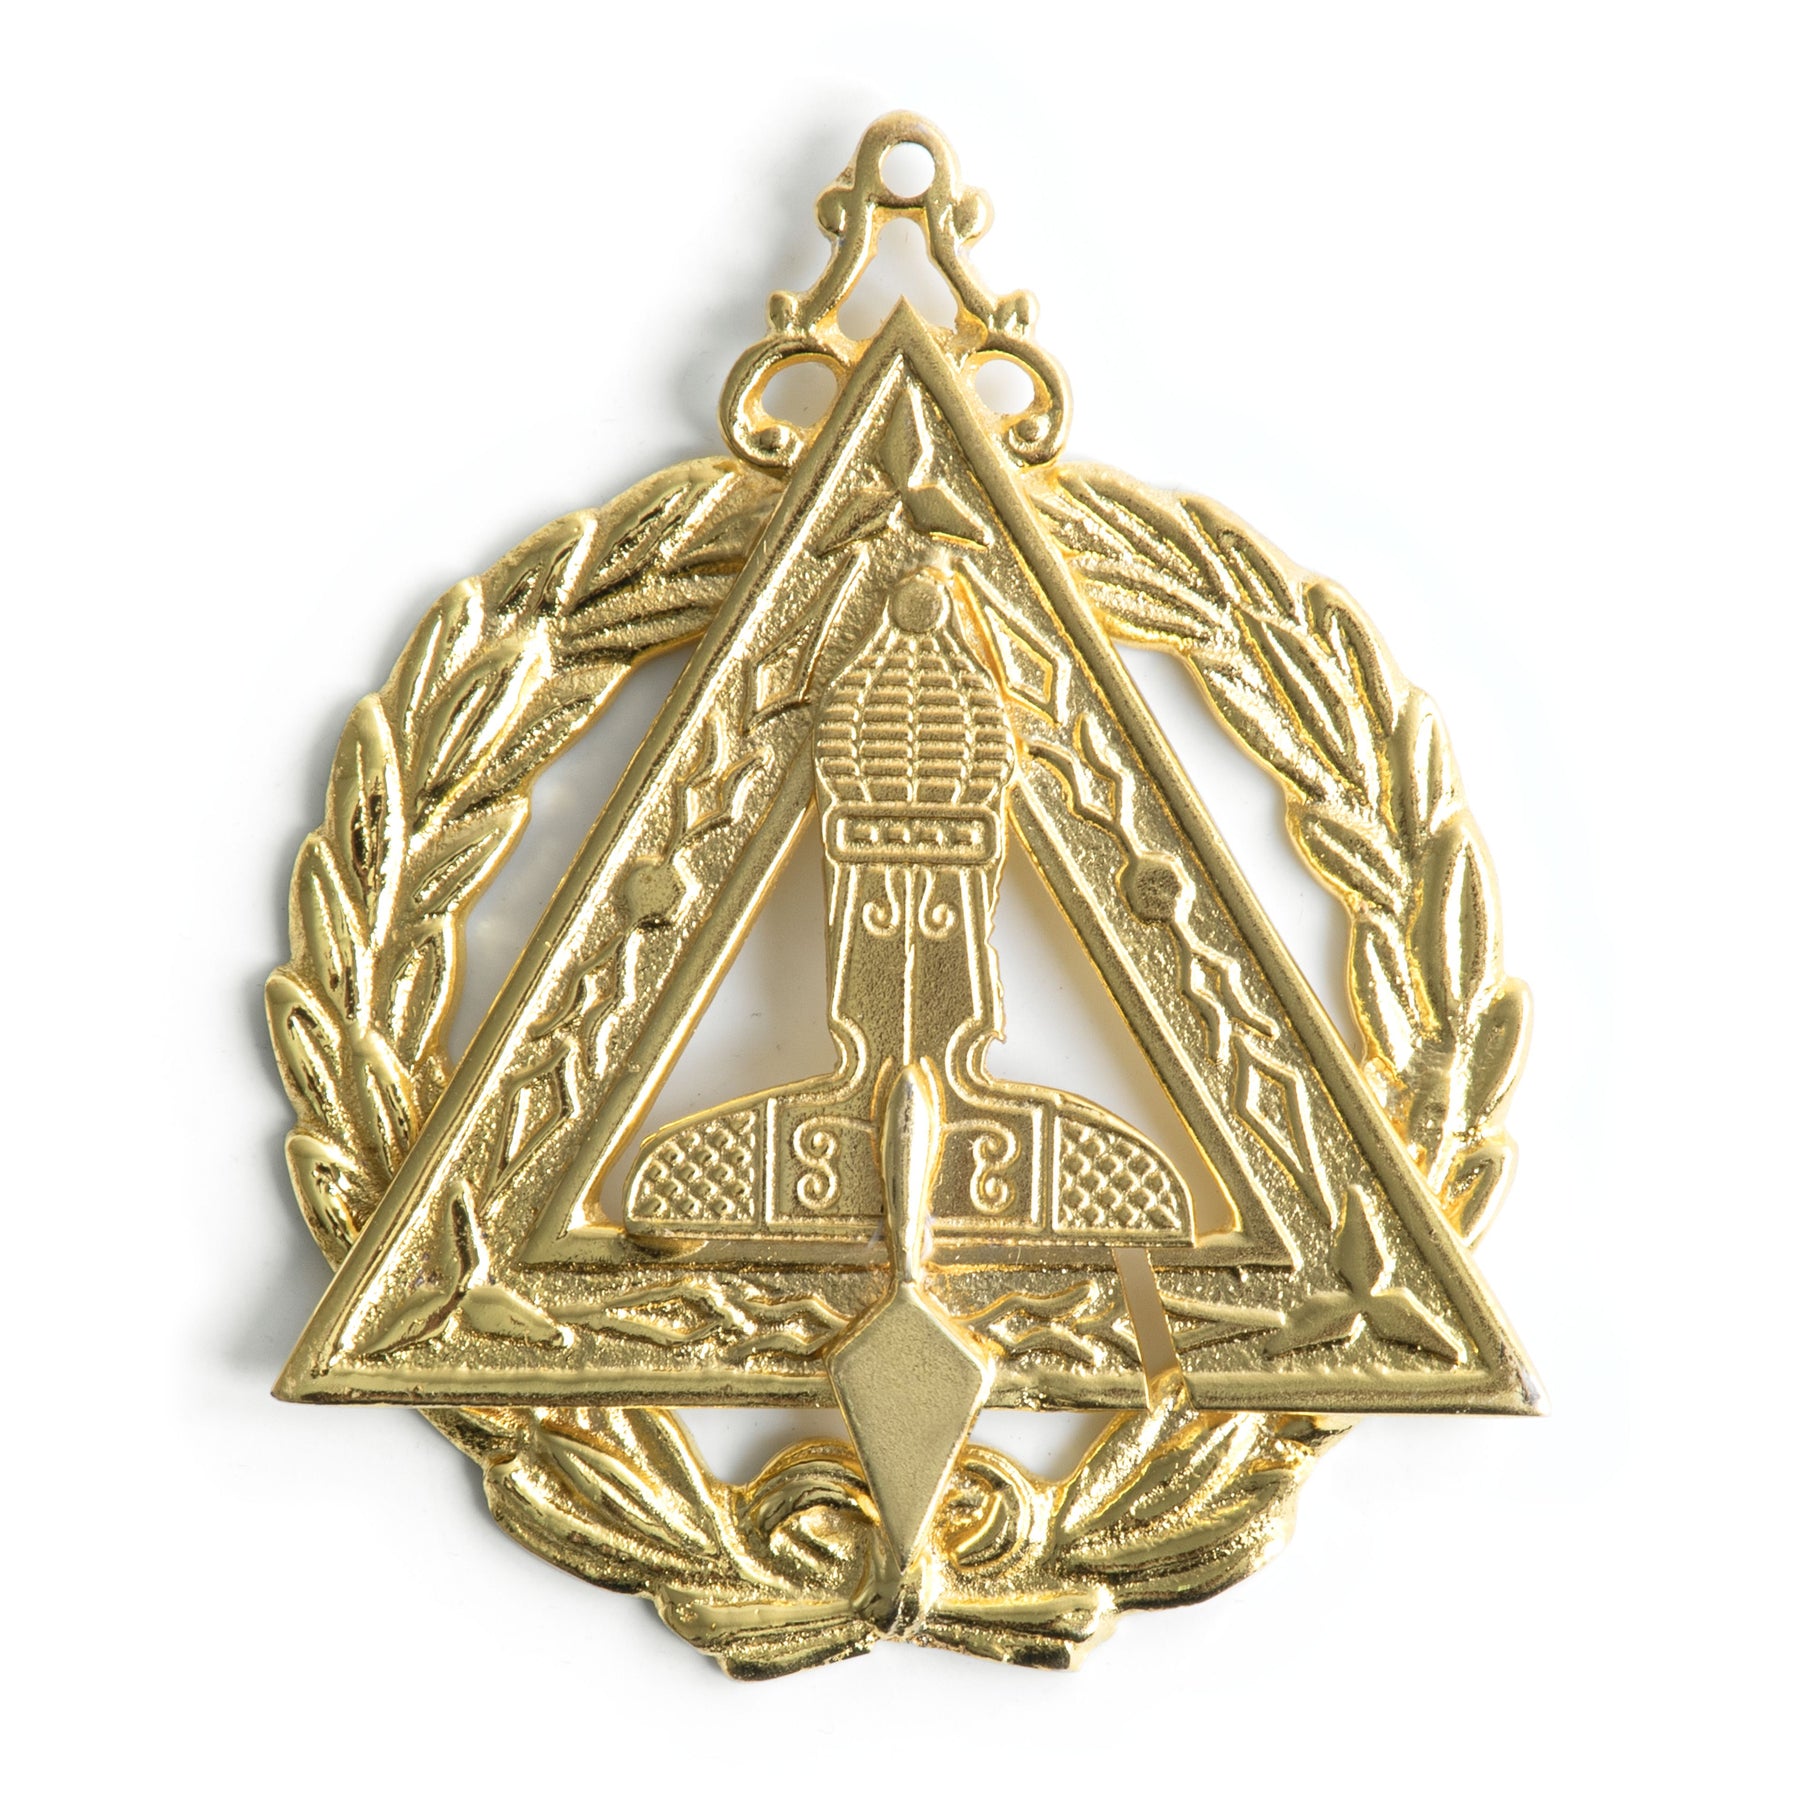 Grand Deputy Master Royal & Select Masters Officer Collar Jewel - Gold Plated - Bricks Masons